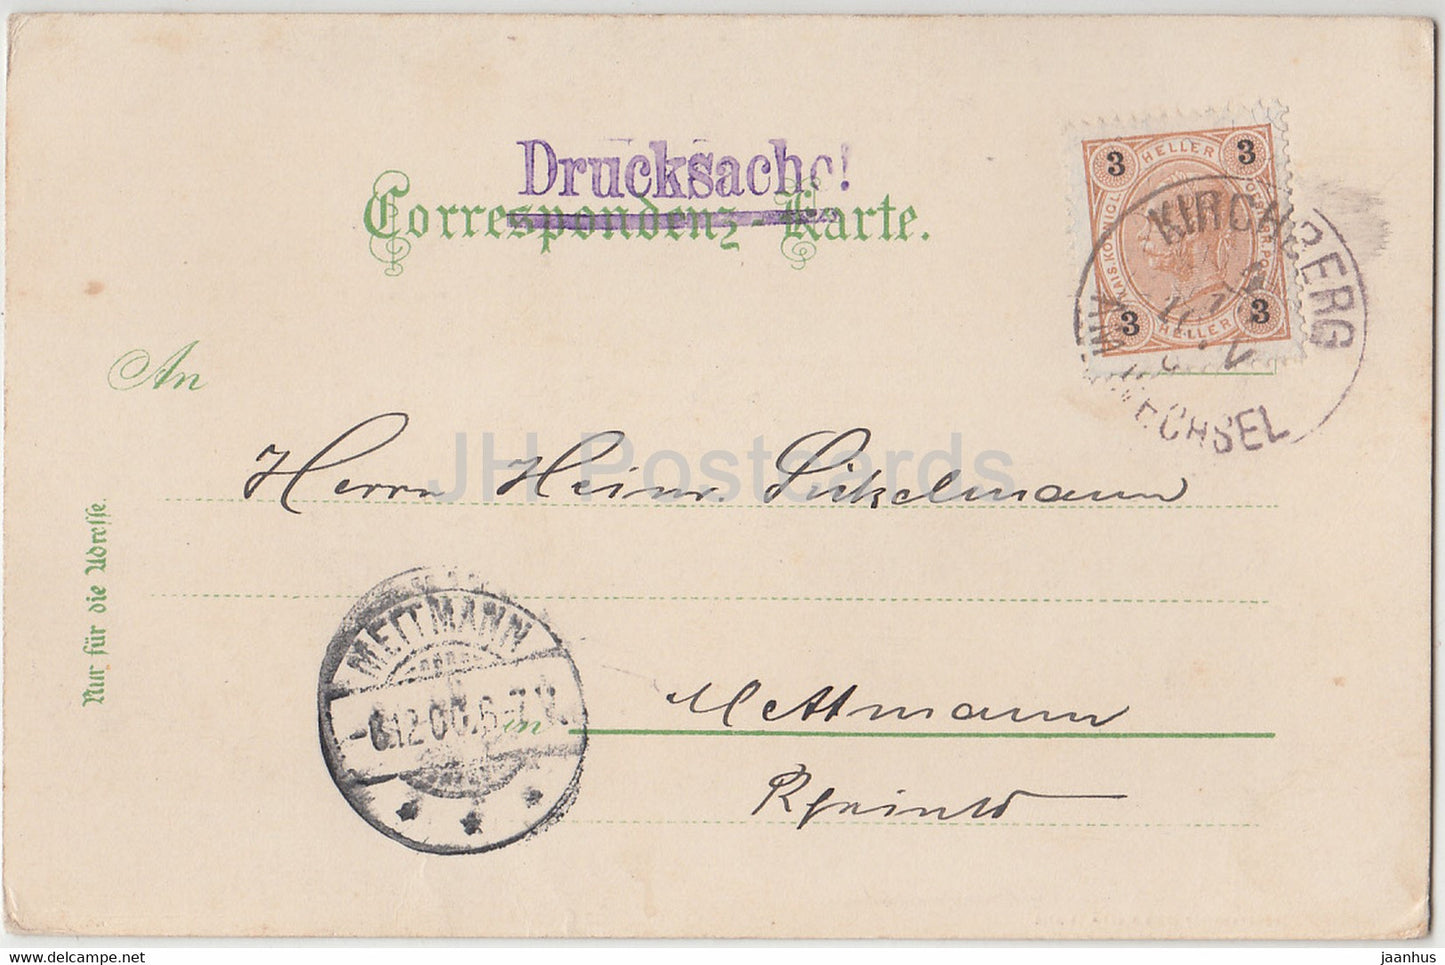 Gruss aus dem Semmering Gebiet - Kalte Rinne - Drucksache - carte postale ancienne - 1900 - Autriche - utilisé